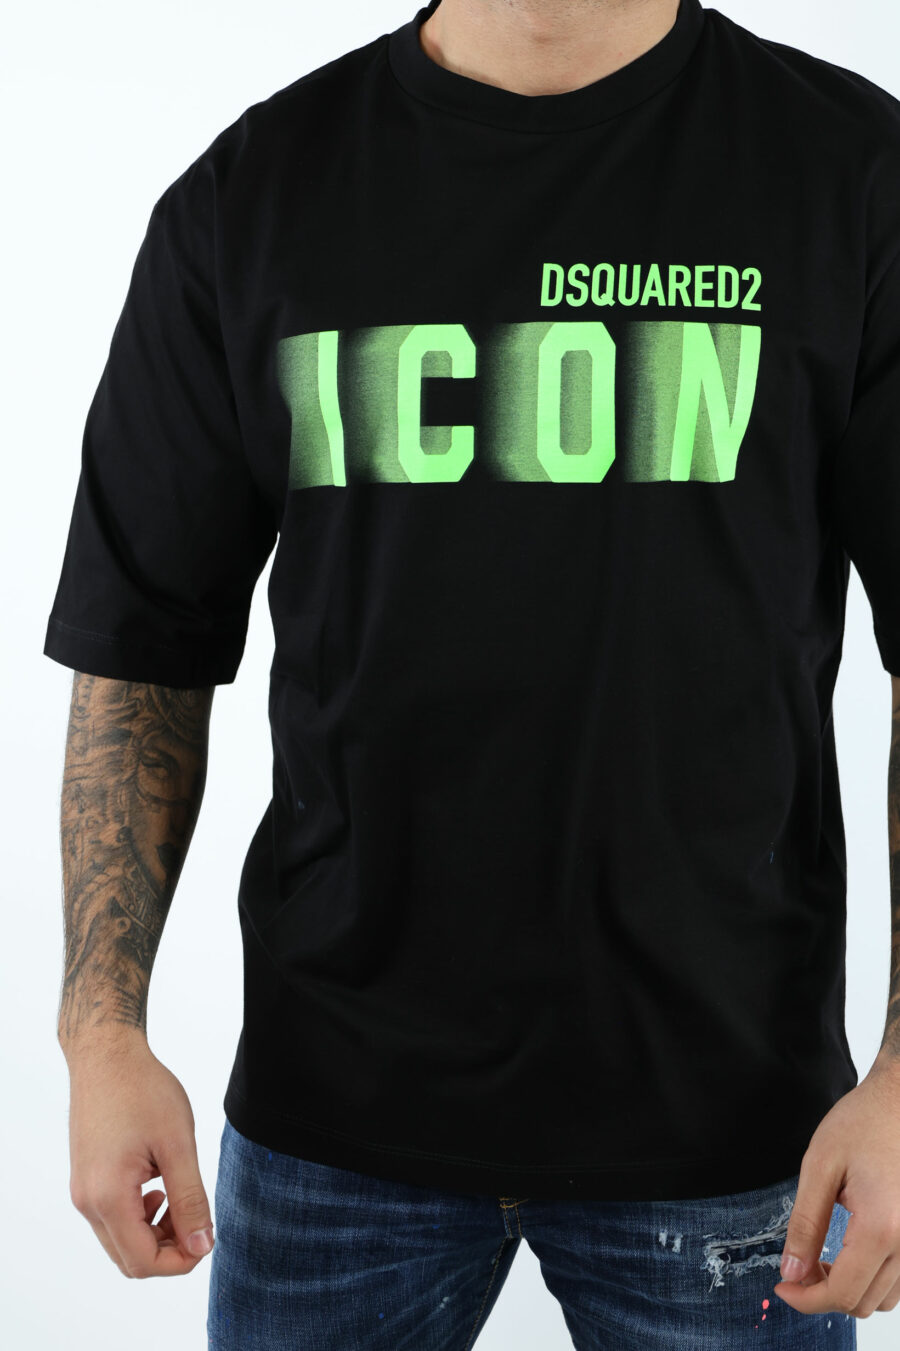 T-shirt oversize noir avec maxilogo "icon" flou vert fluo - 106933